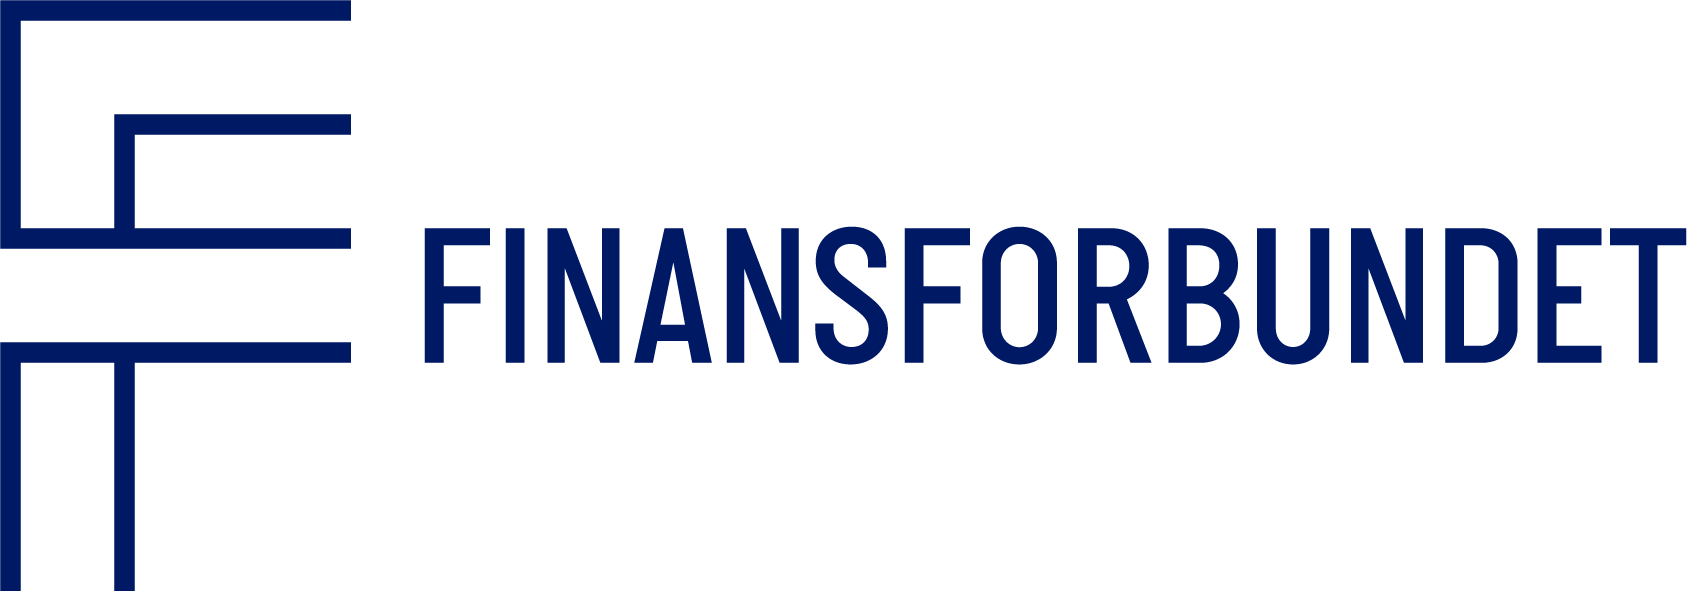 Finansforbundet logo DARK BLUE RGB